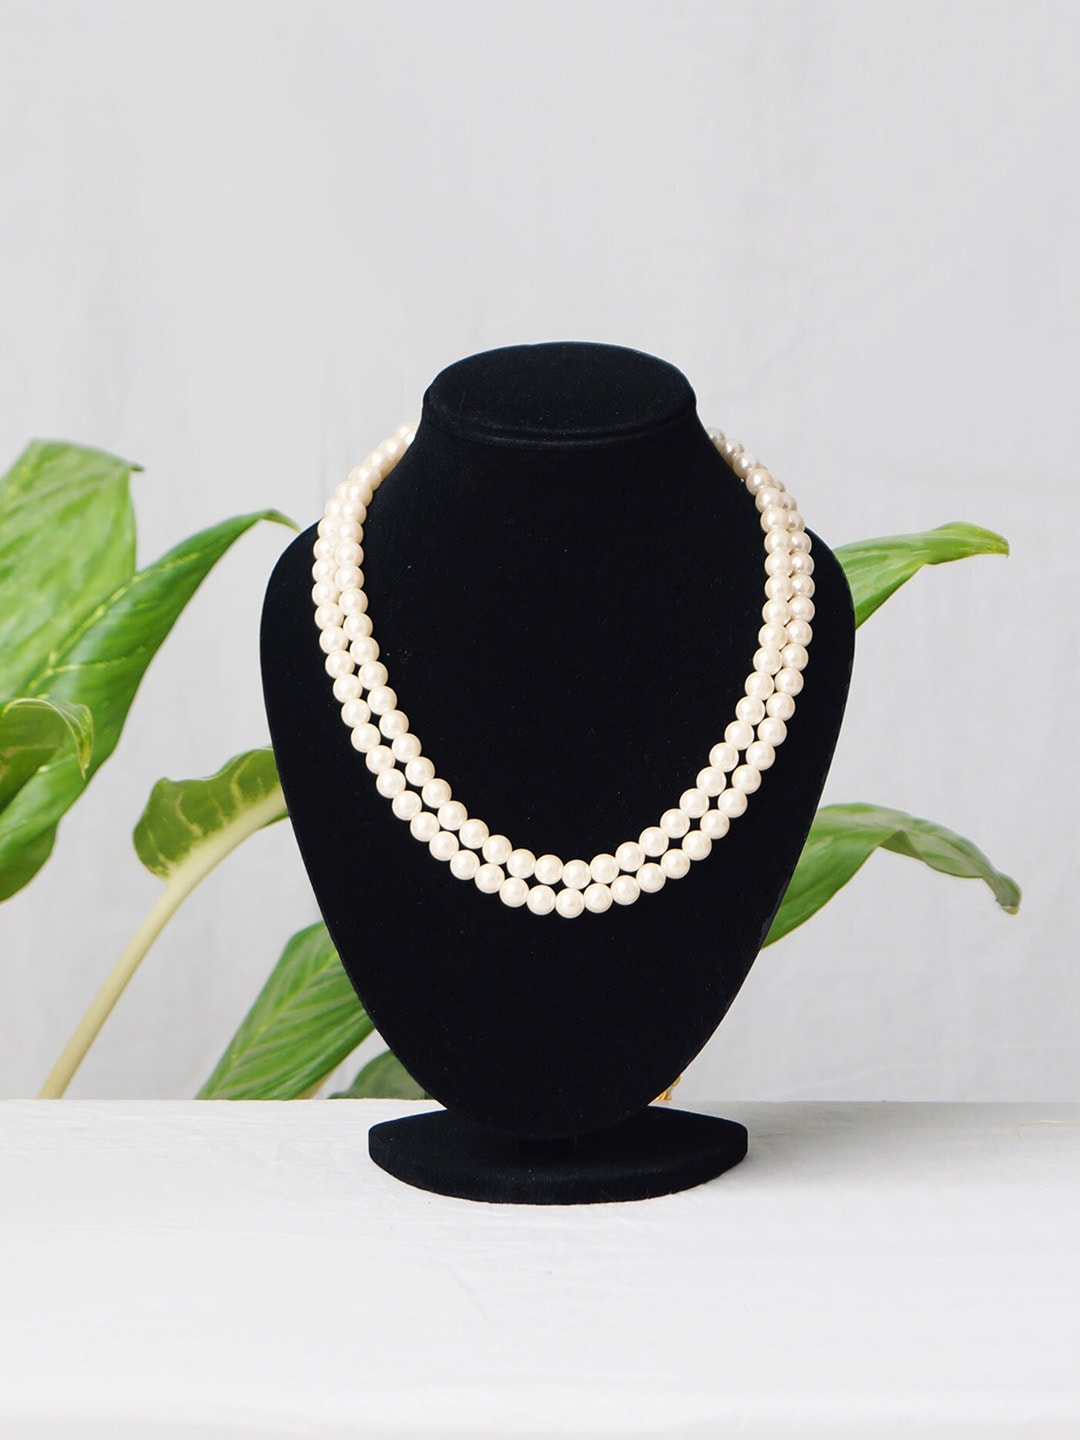 Unnati Silks White Layered Amravati Beads Necklace Price in India